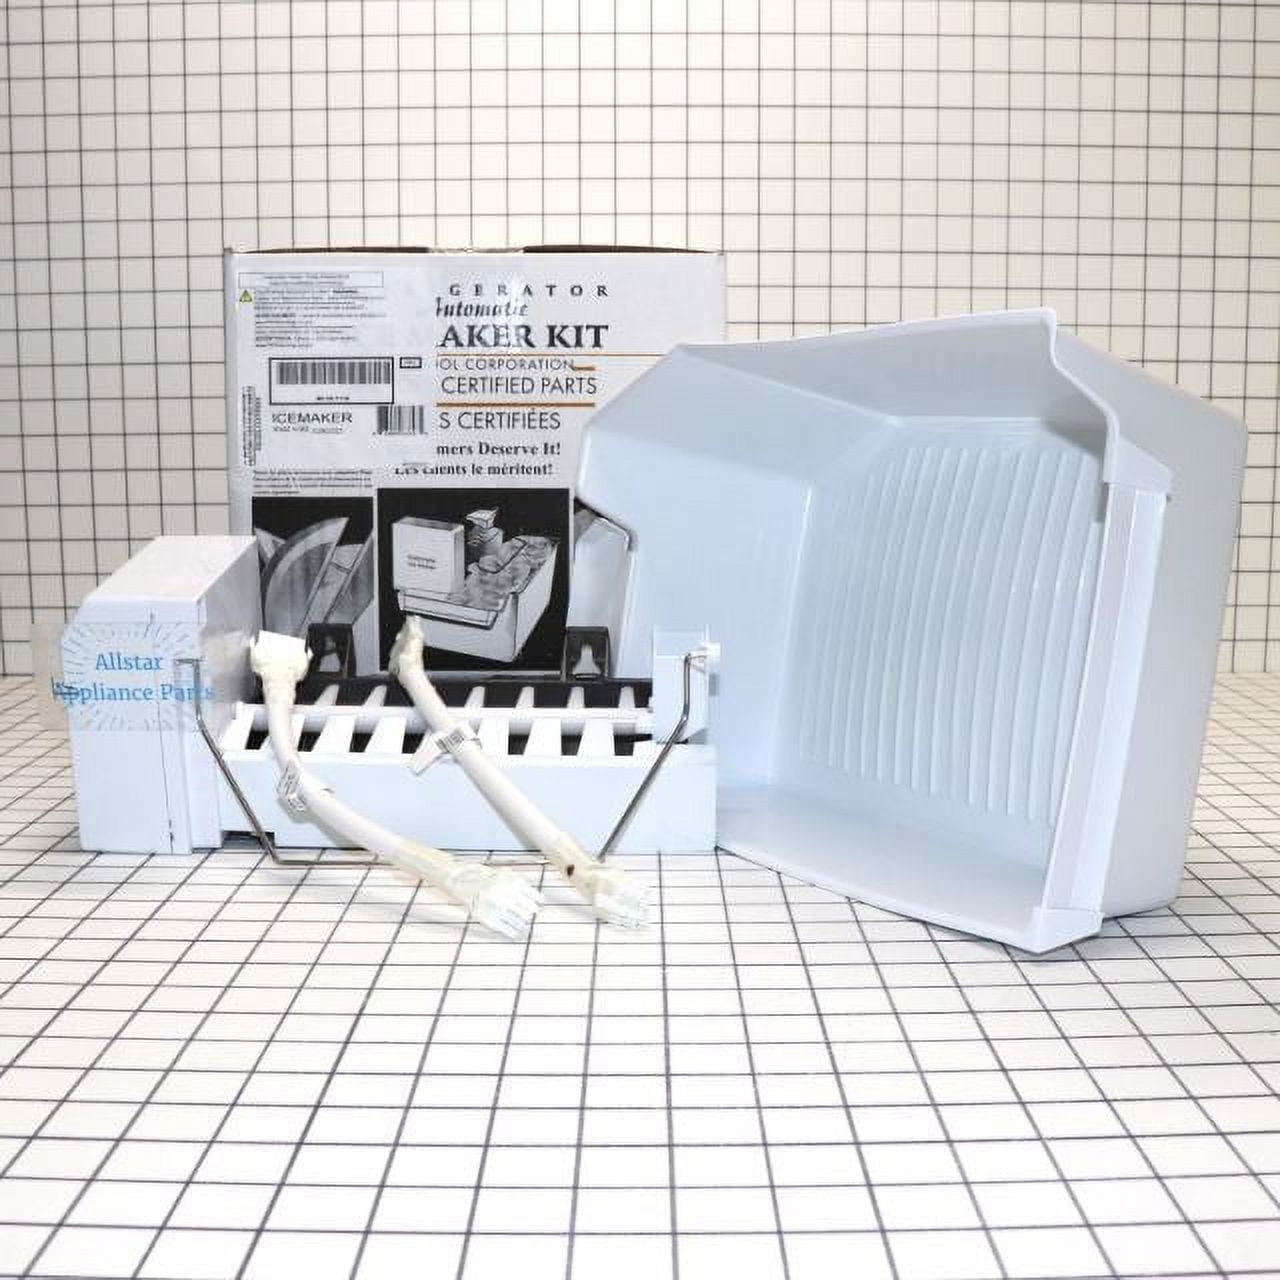 Whirlpool W11517113 Ice Maker Kit